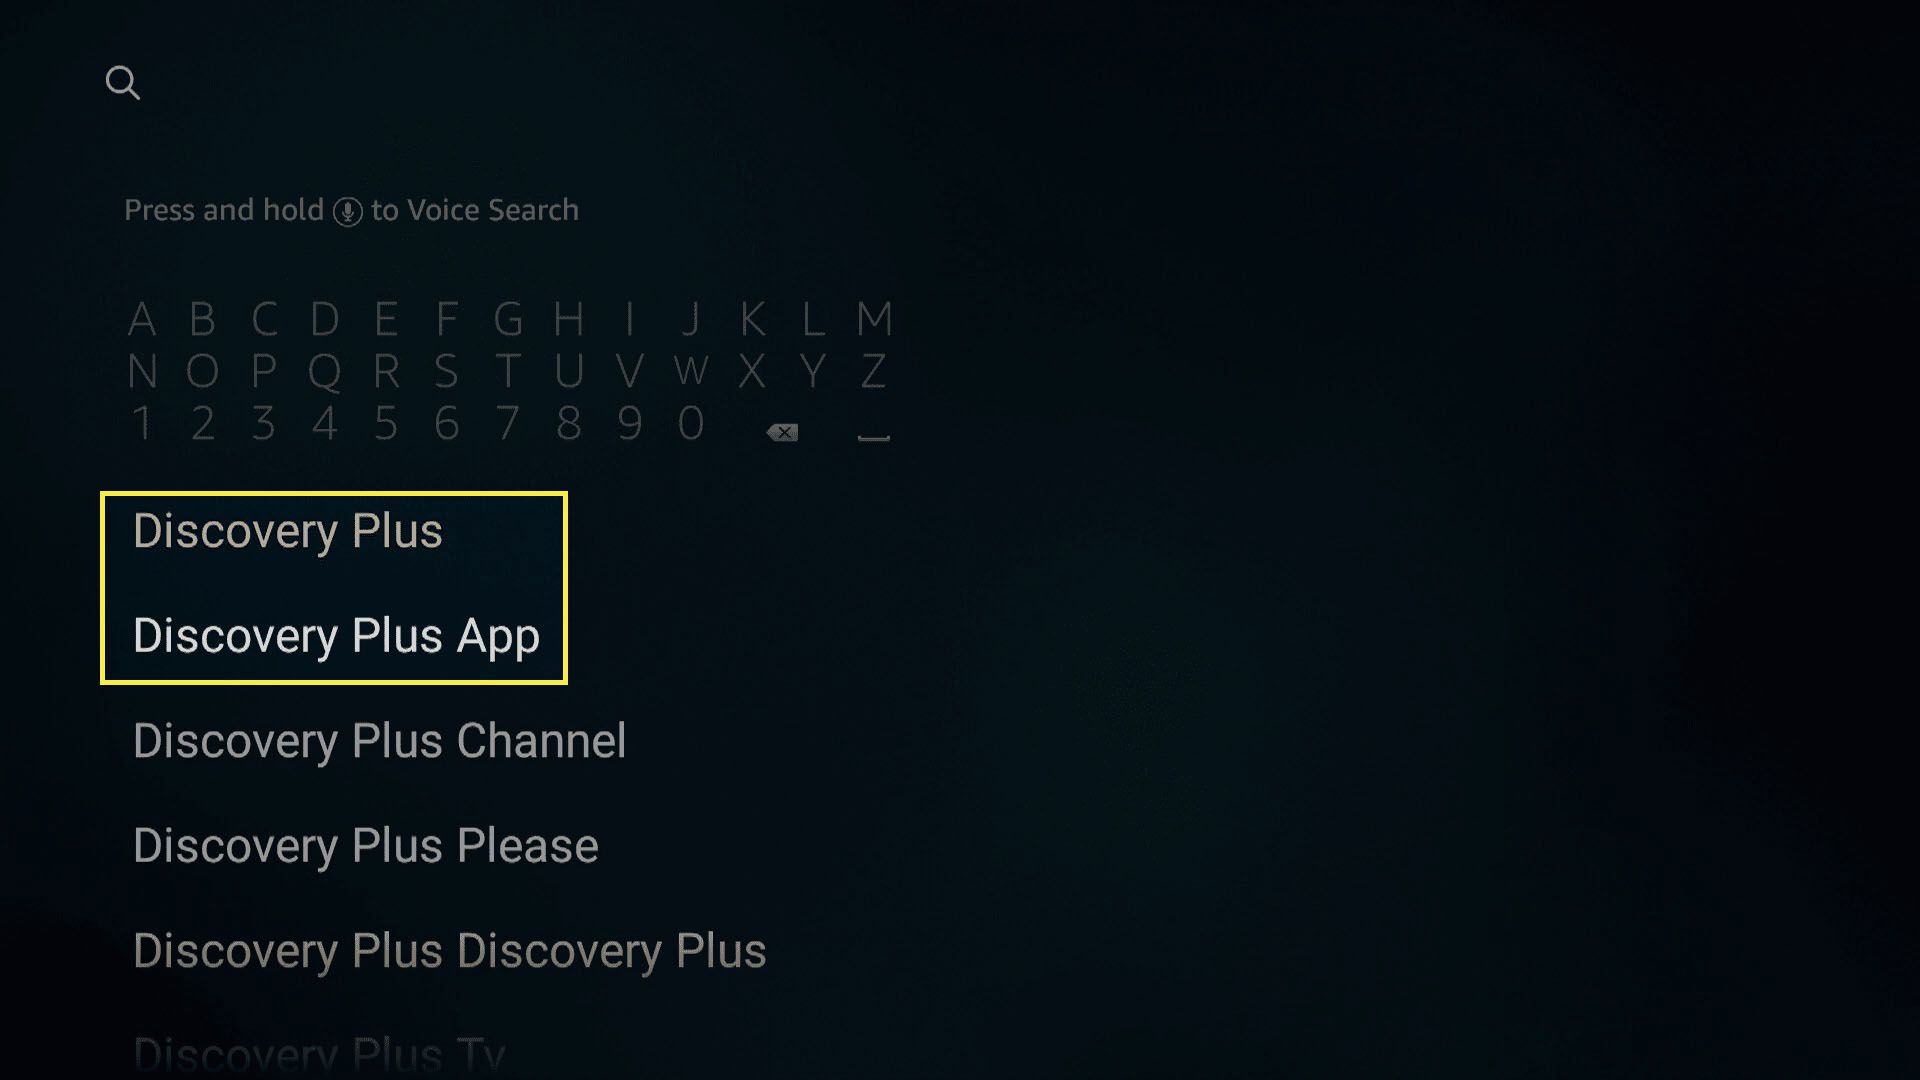 Söker efter Discovery Plus i Amazon Fire TV-sökfunktionen.